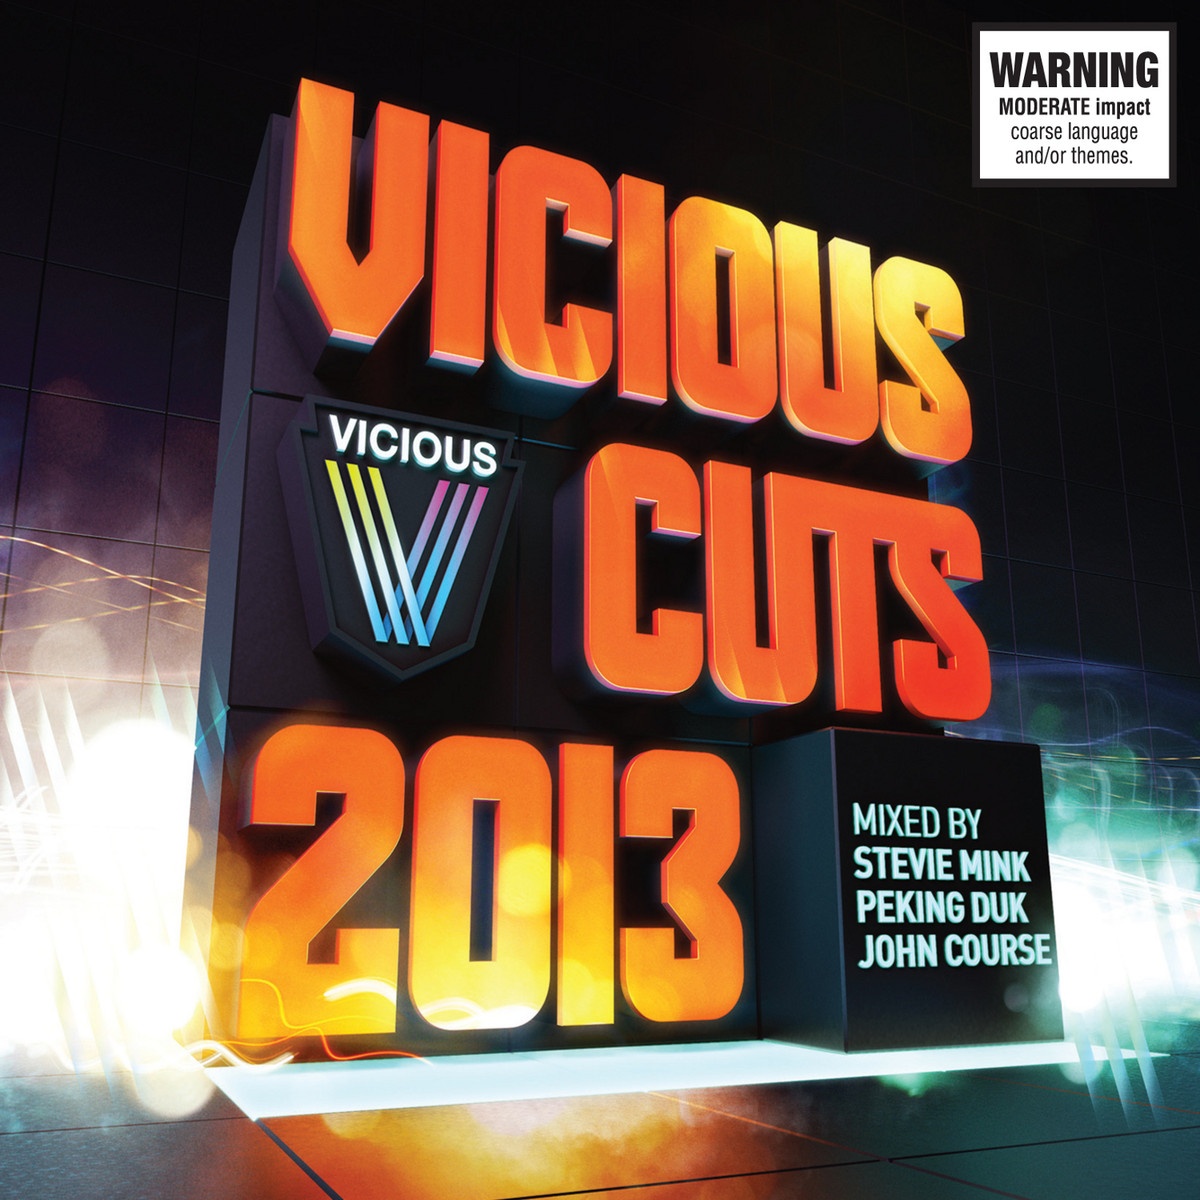 Vicious Cuts 2013